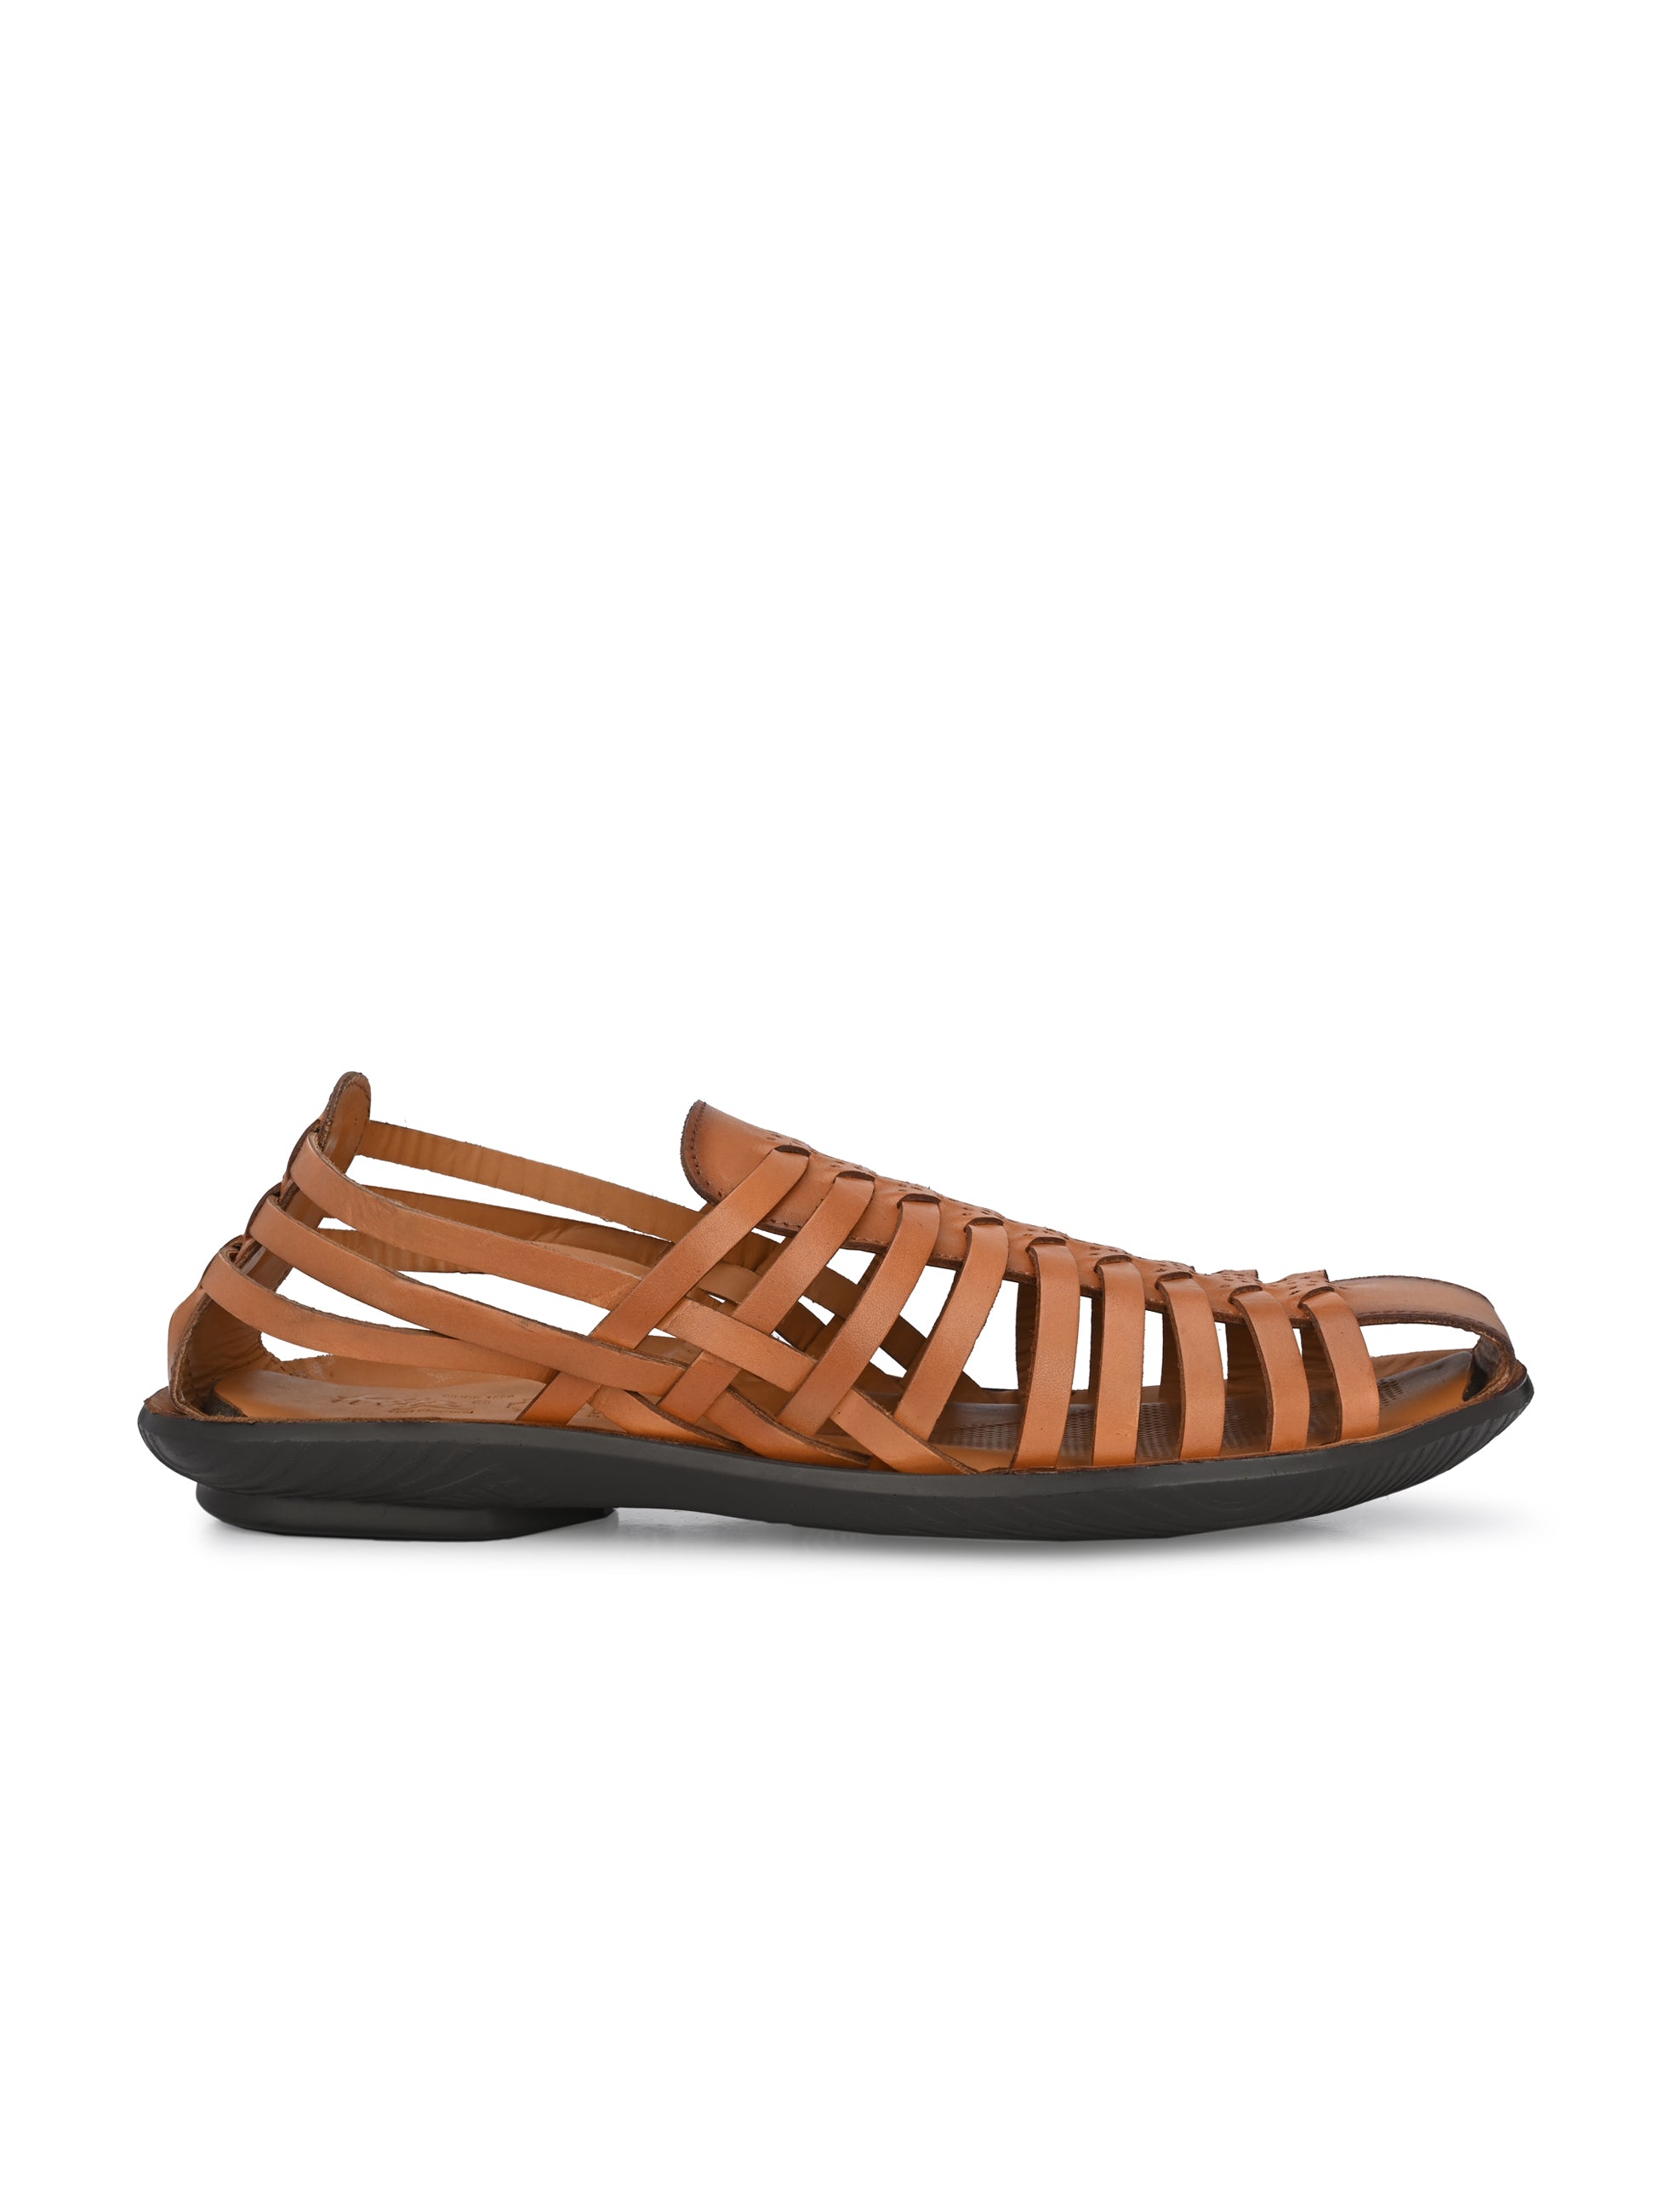 2023 Women's Sandals Open Toe Buckle Ankle Strap Platform Wedge Casual Comfort  Shoes Dressy Summer Beach Travel - Walmart.com